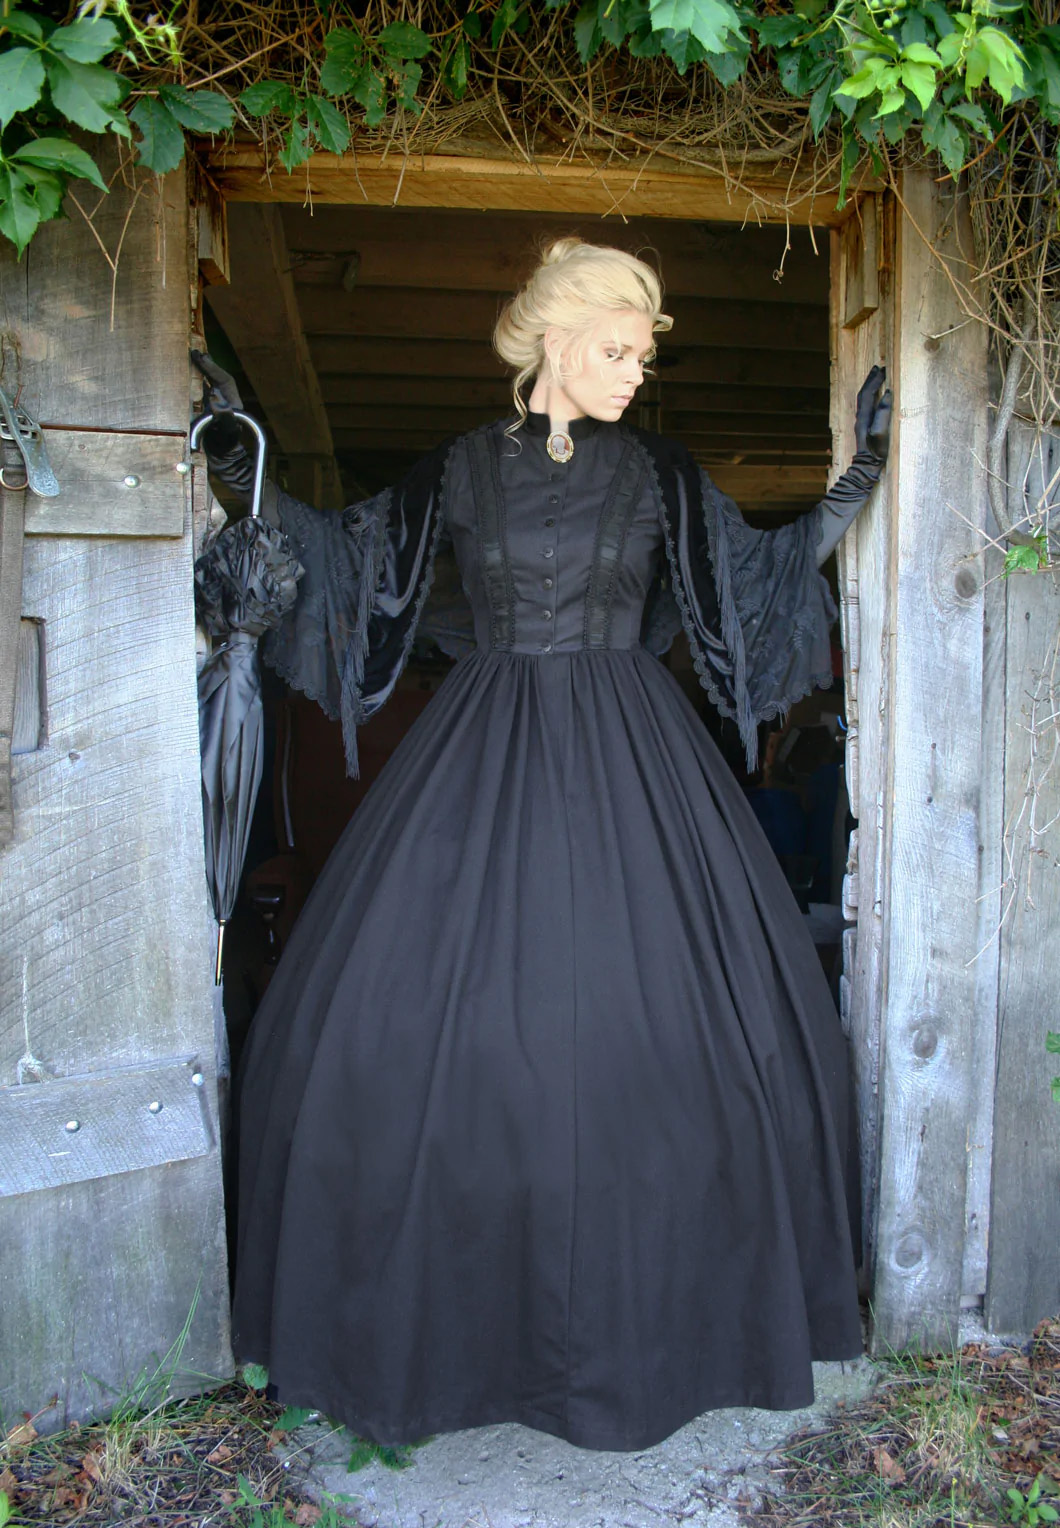 STEAMPUNK DRESSES FOR SALE - Vintage, Victorian, Gothic, Wild West